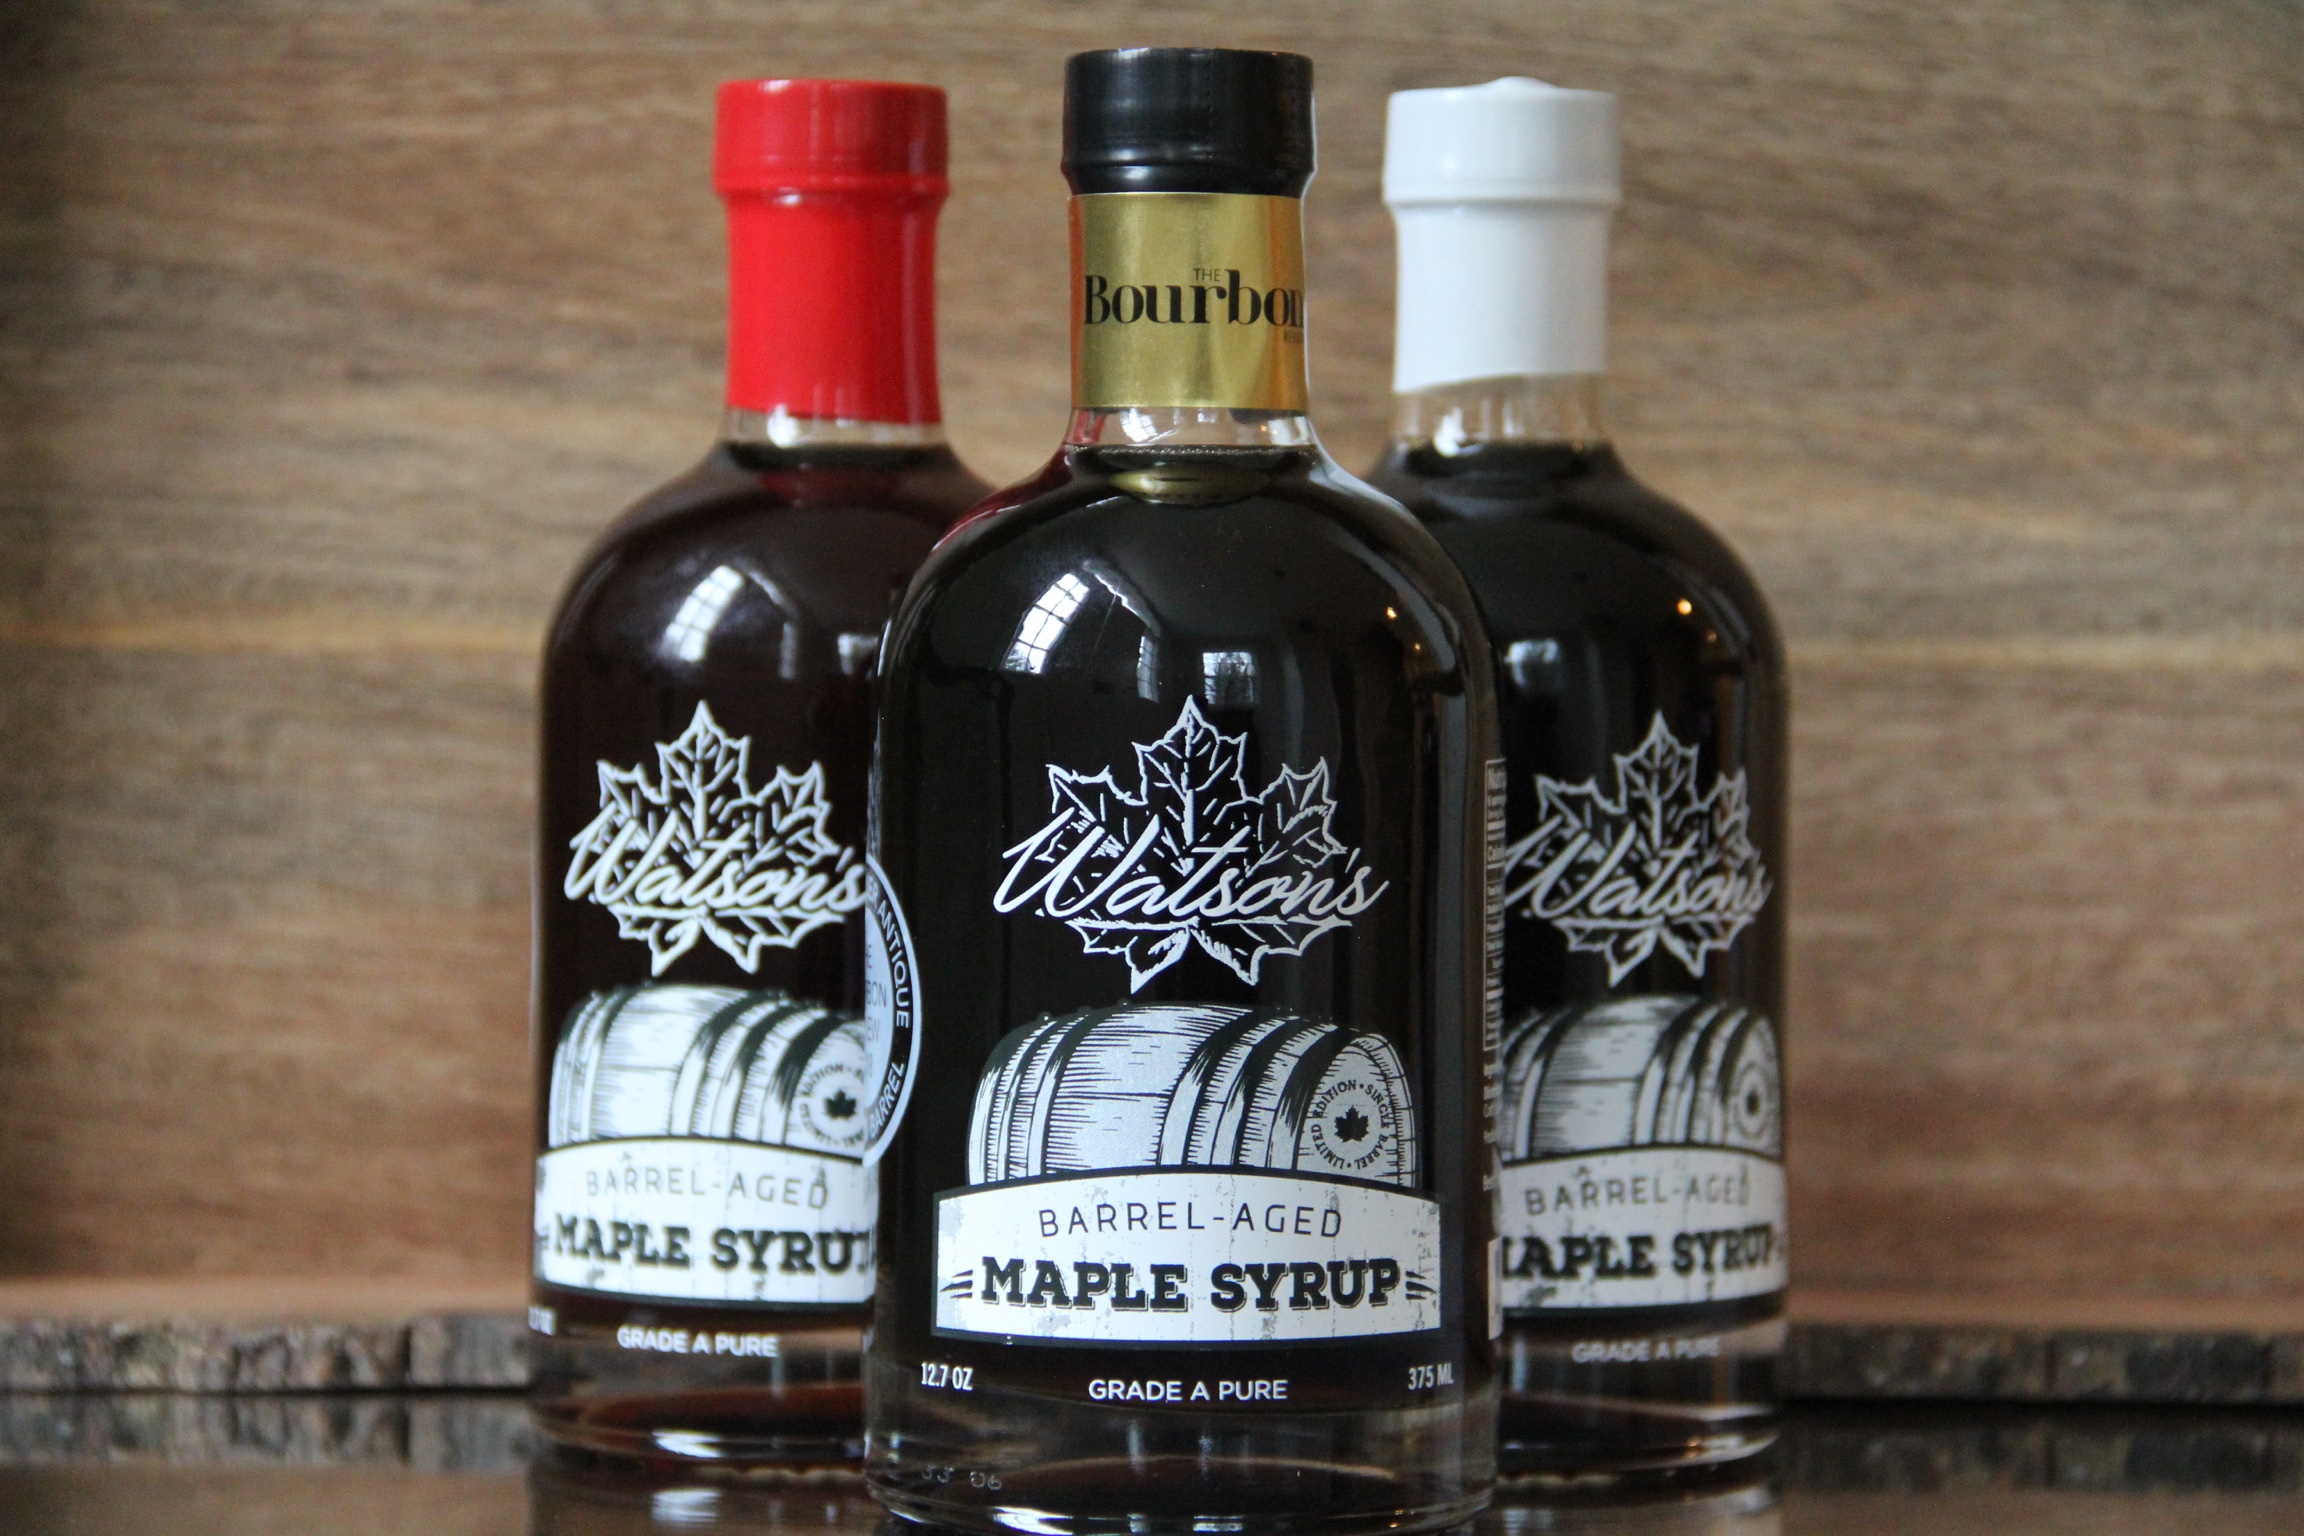 Watson's Bourbon Barrel-Aged Maple Syrup